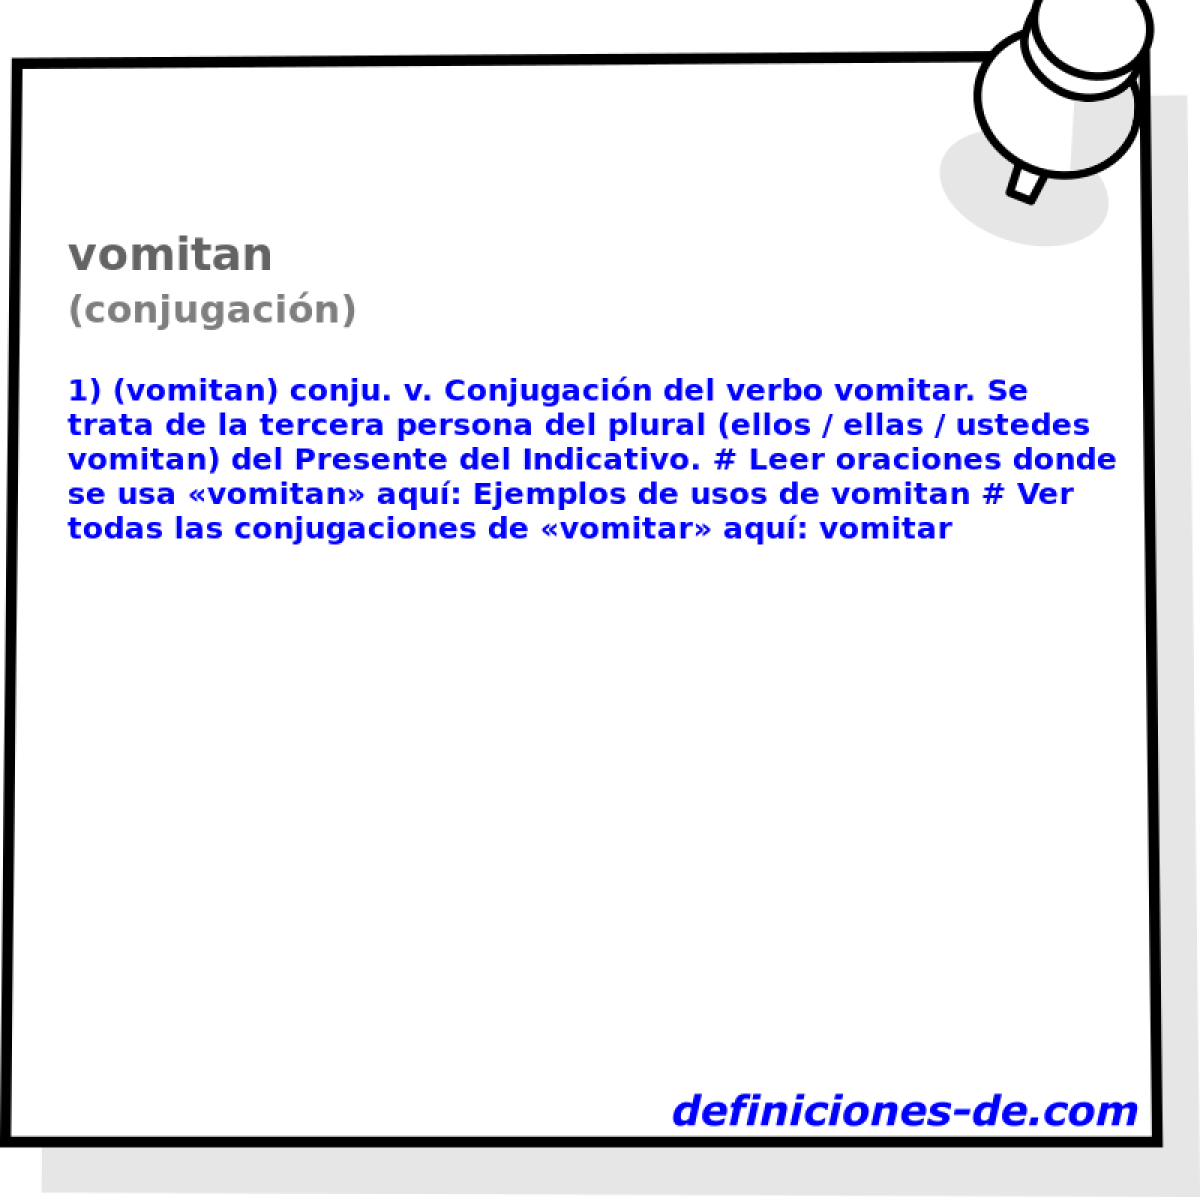 vomitan (conjugacin)